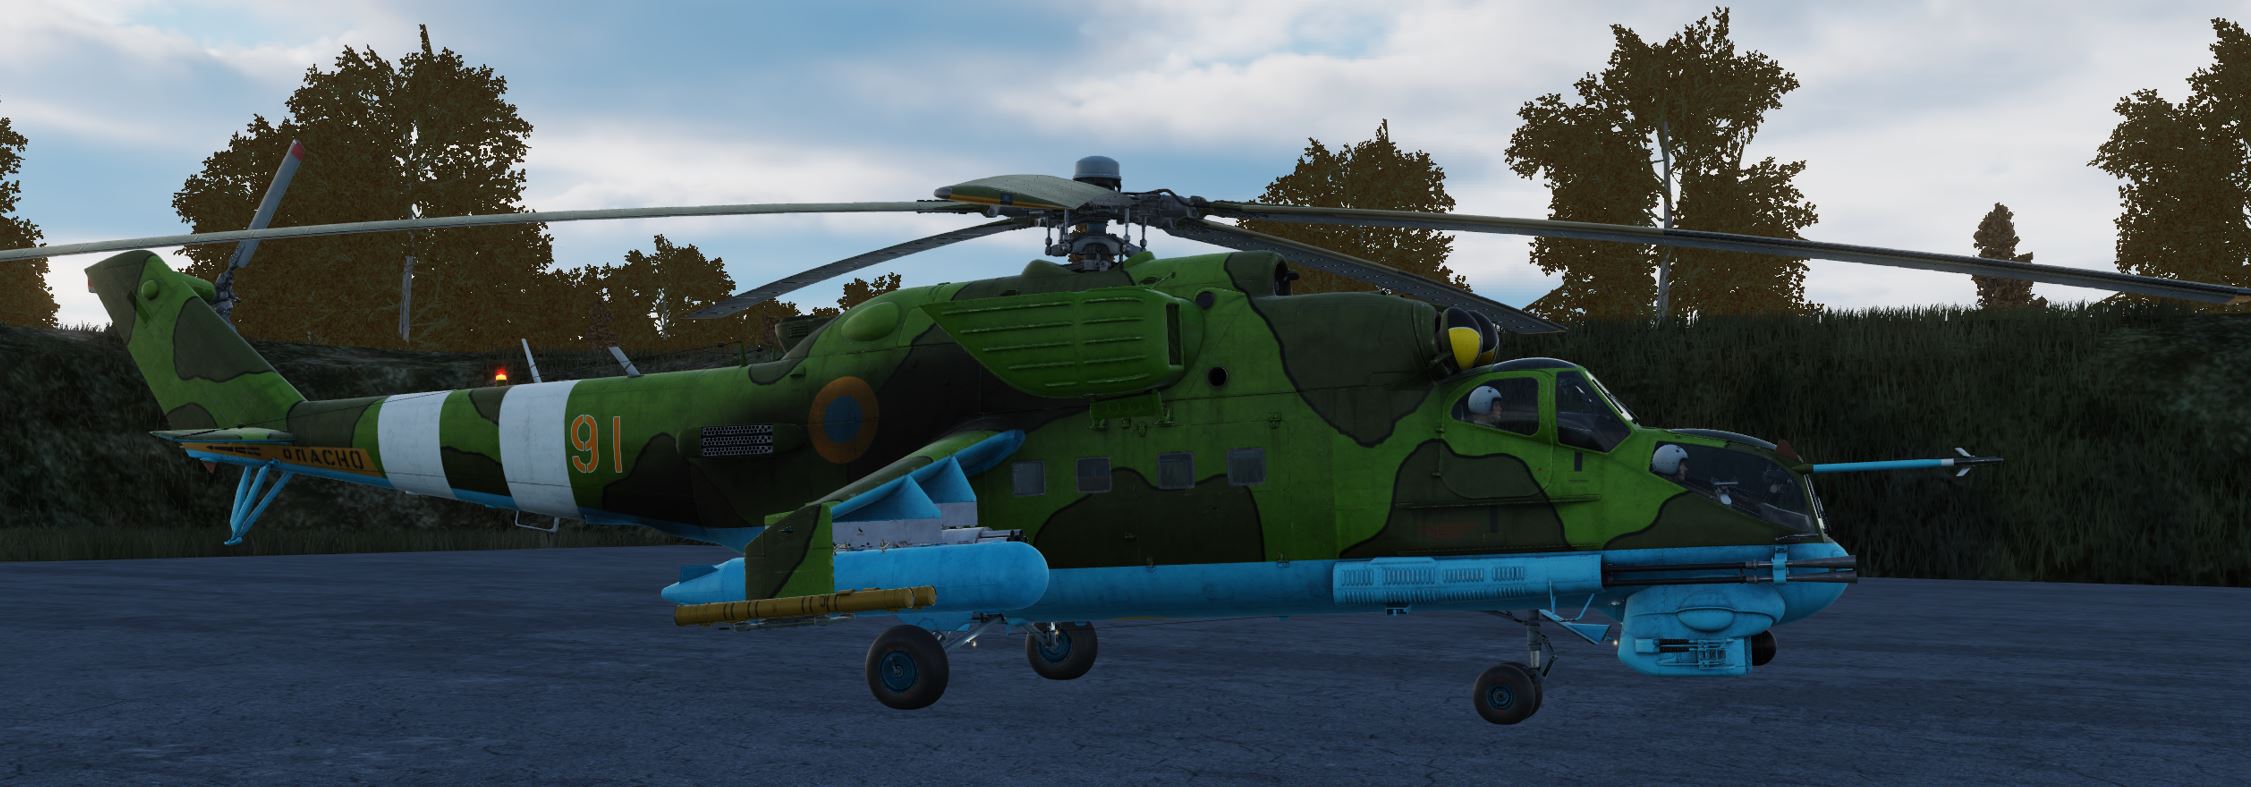 Ukrainian Army Aviation - Green and Black Camoflague